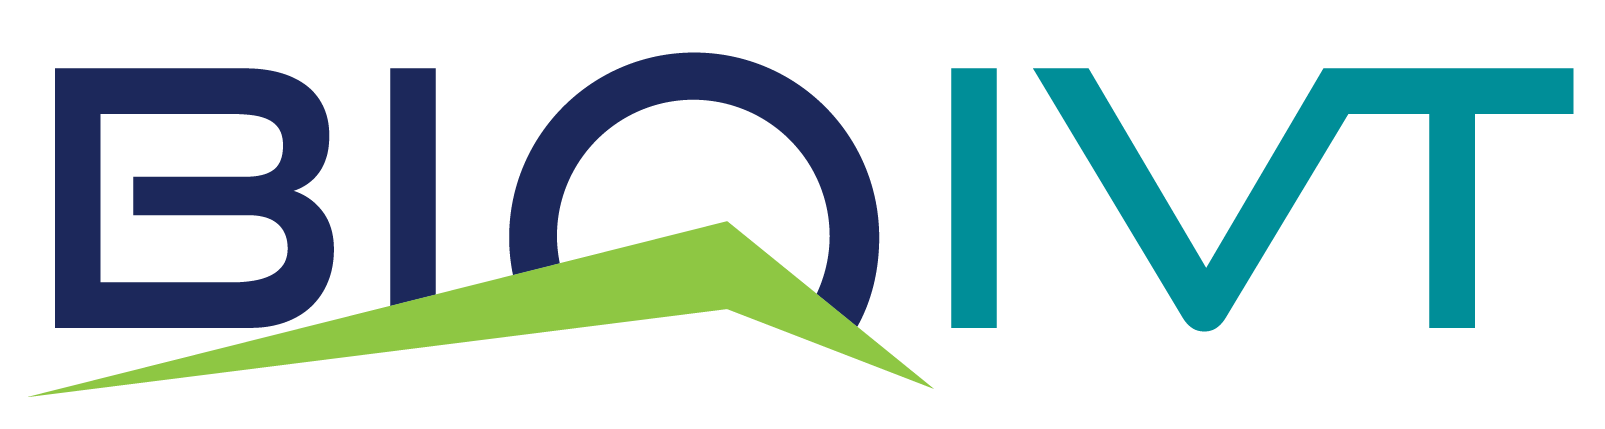 athenahealth logo, color